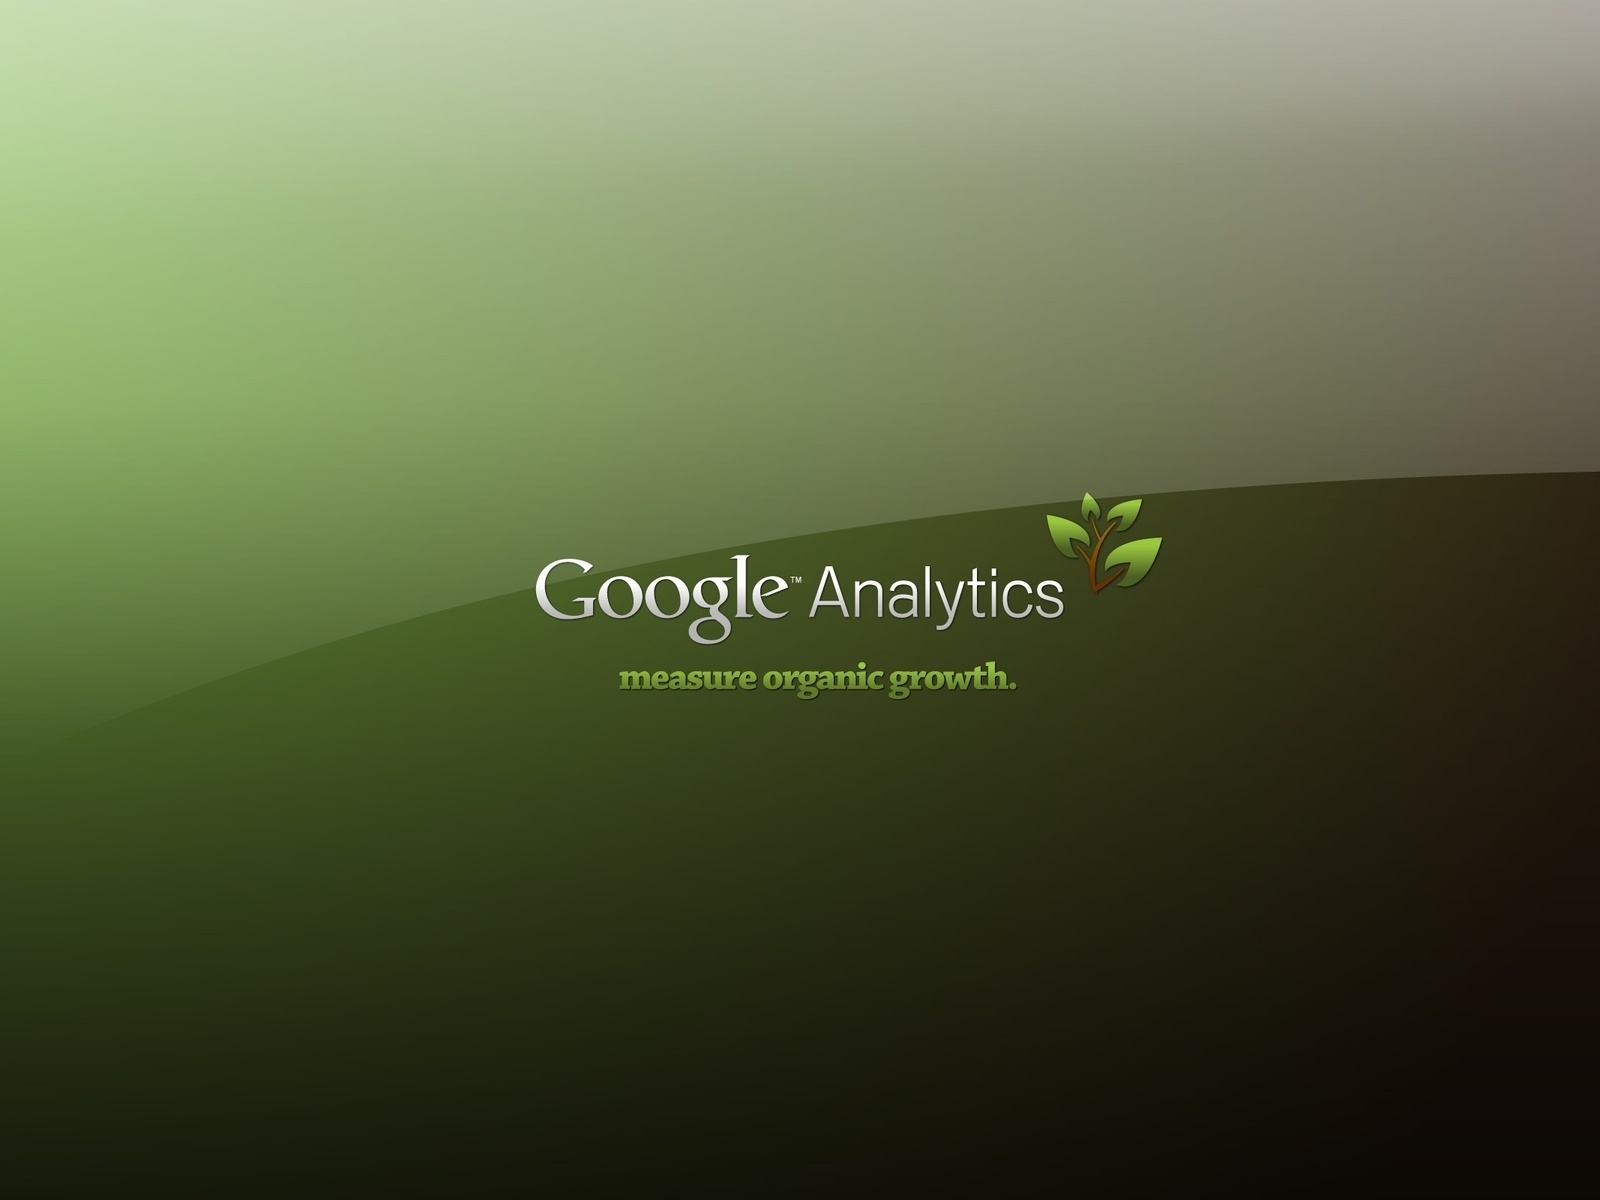 Google Analytics Poster for 1600 x 1200 resolution